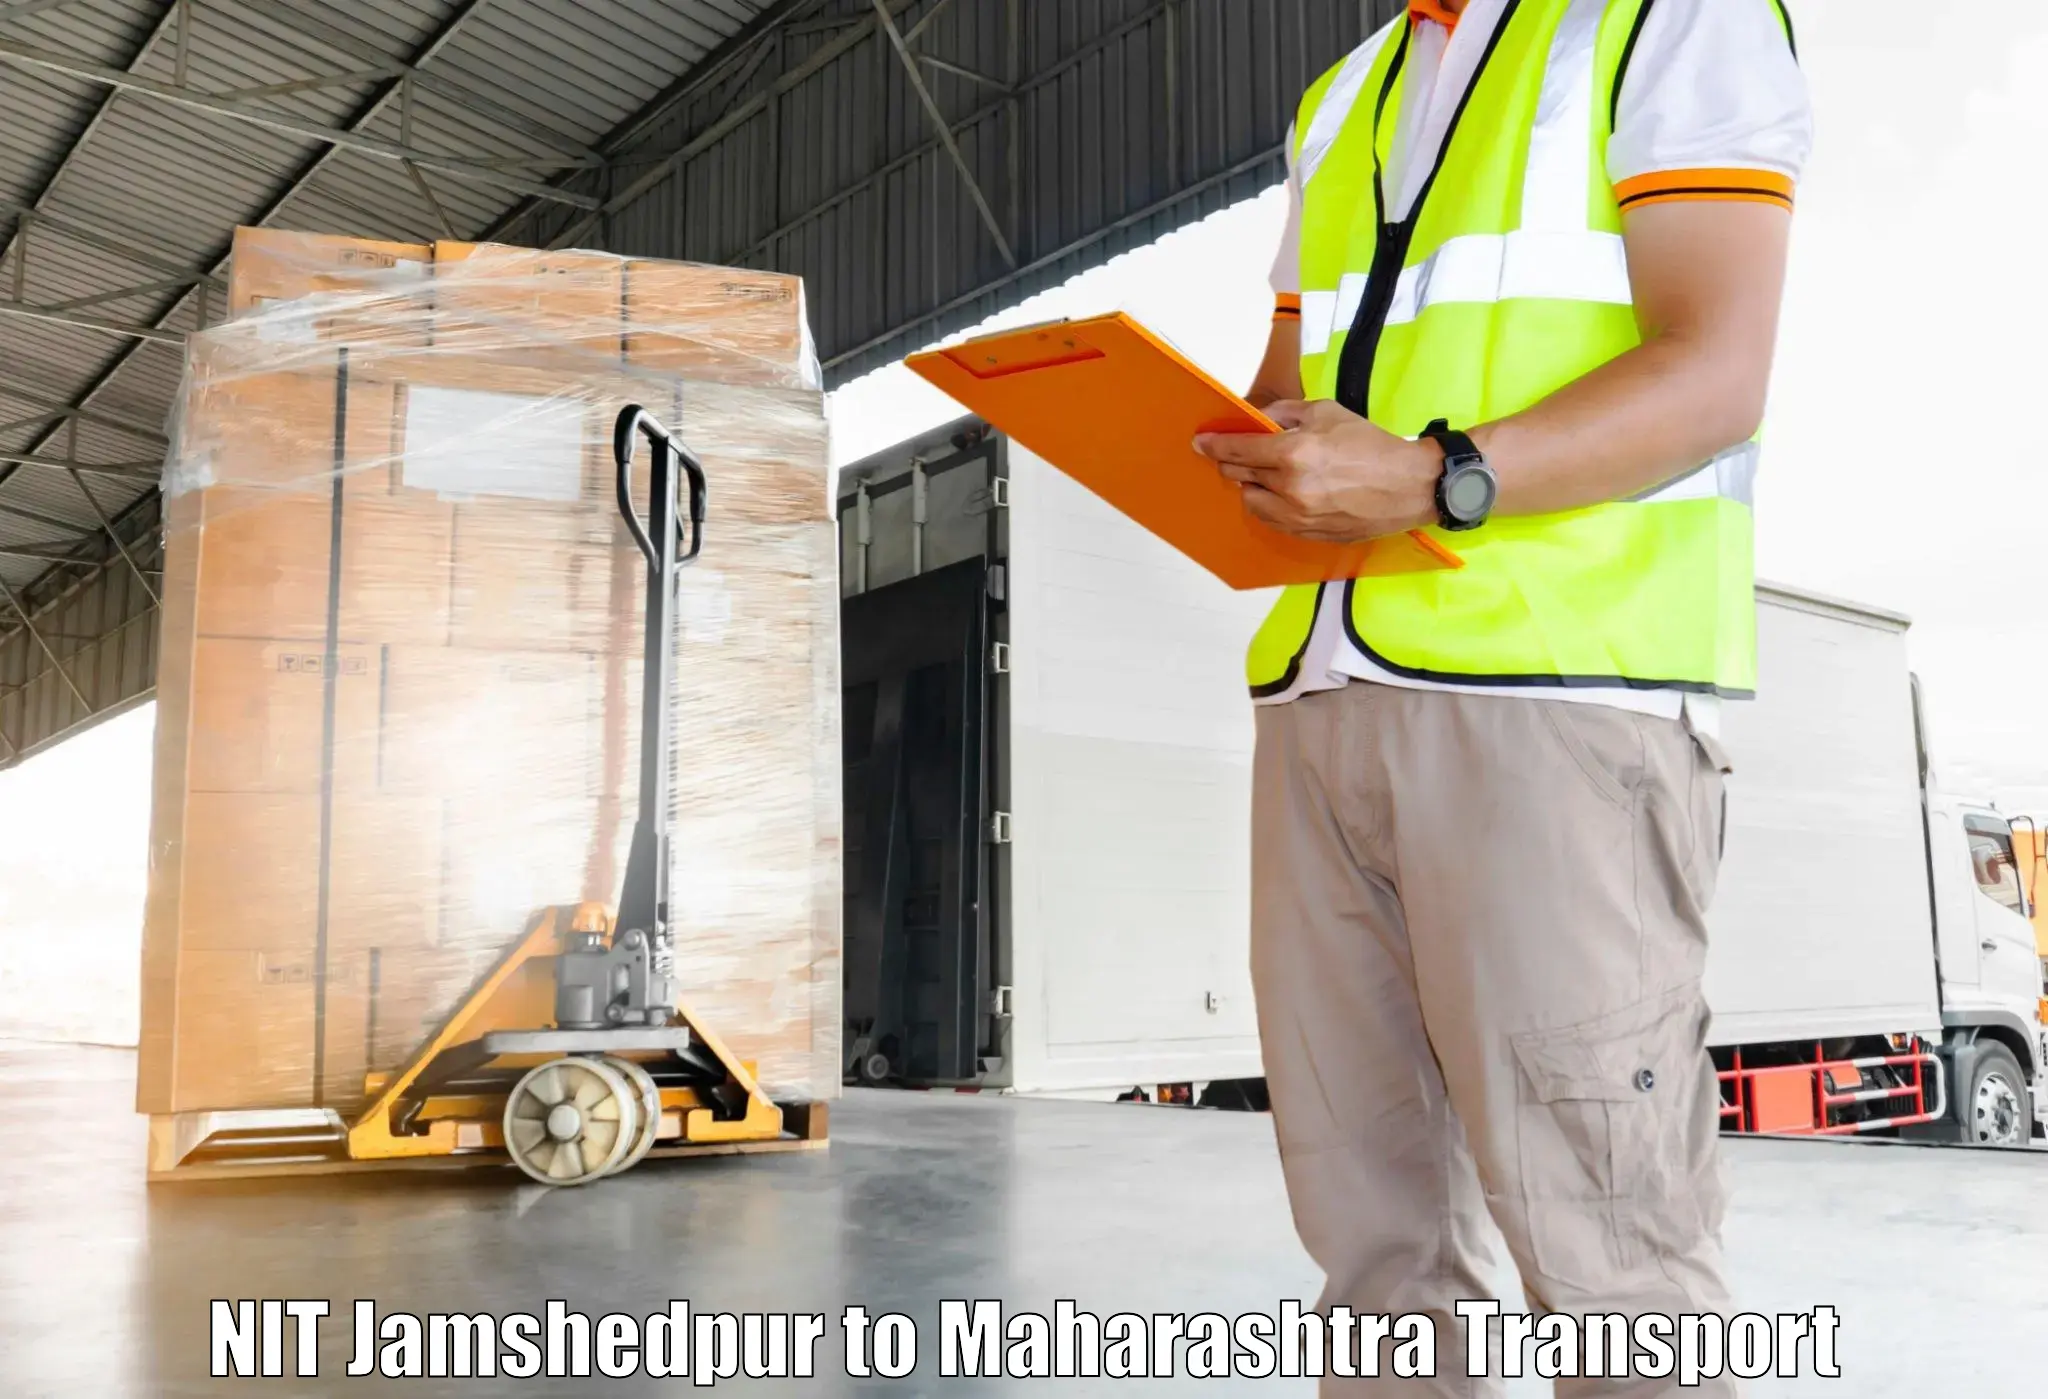 Delivery service NIT Jamshedpur to Warud